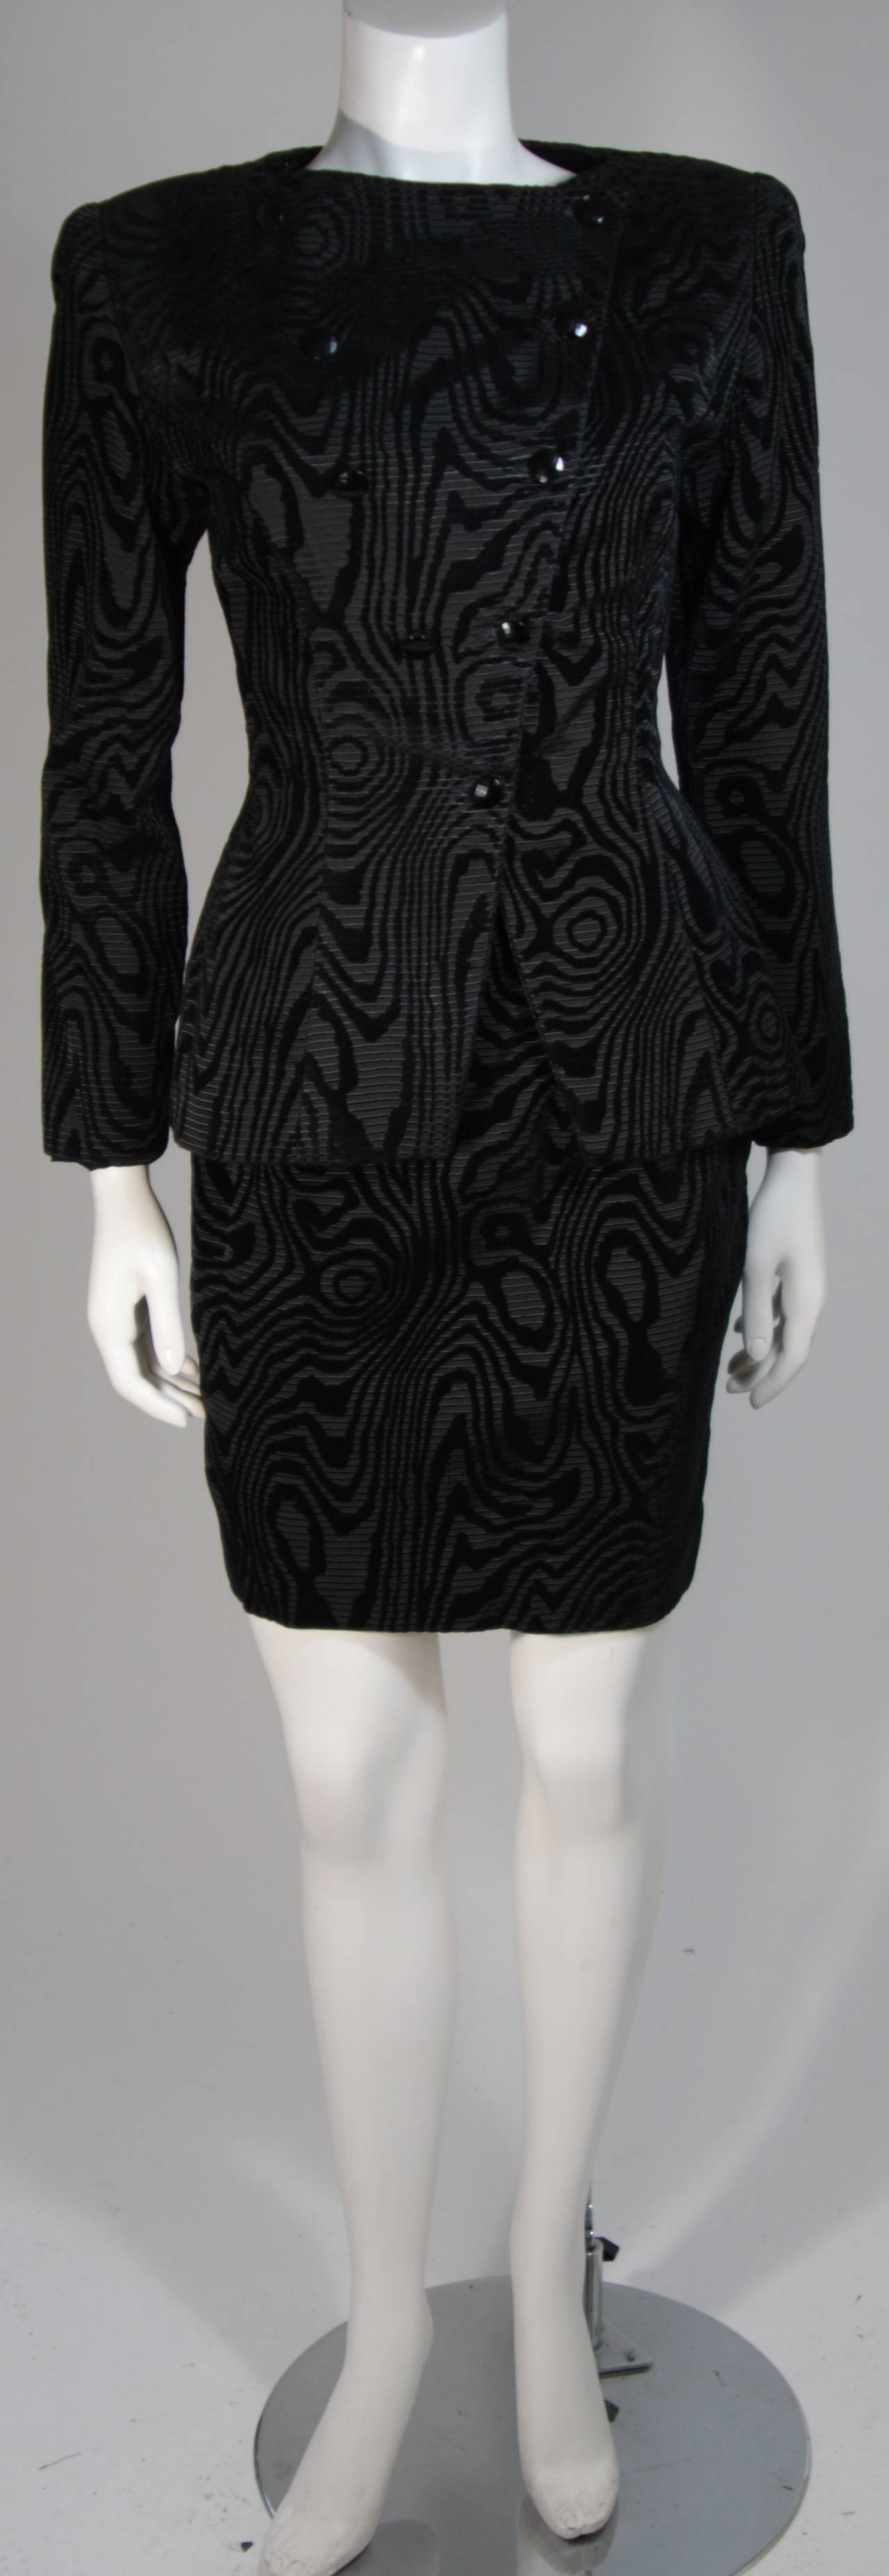 Women's Vicky Tiel Black Silk Skirt Suit with Patterned Velvet Accents Size 38